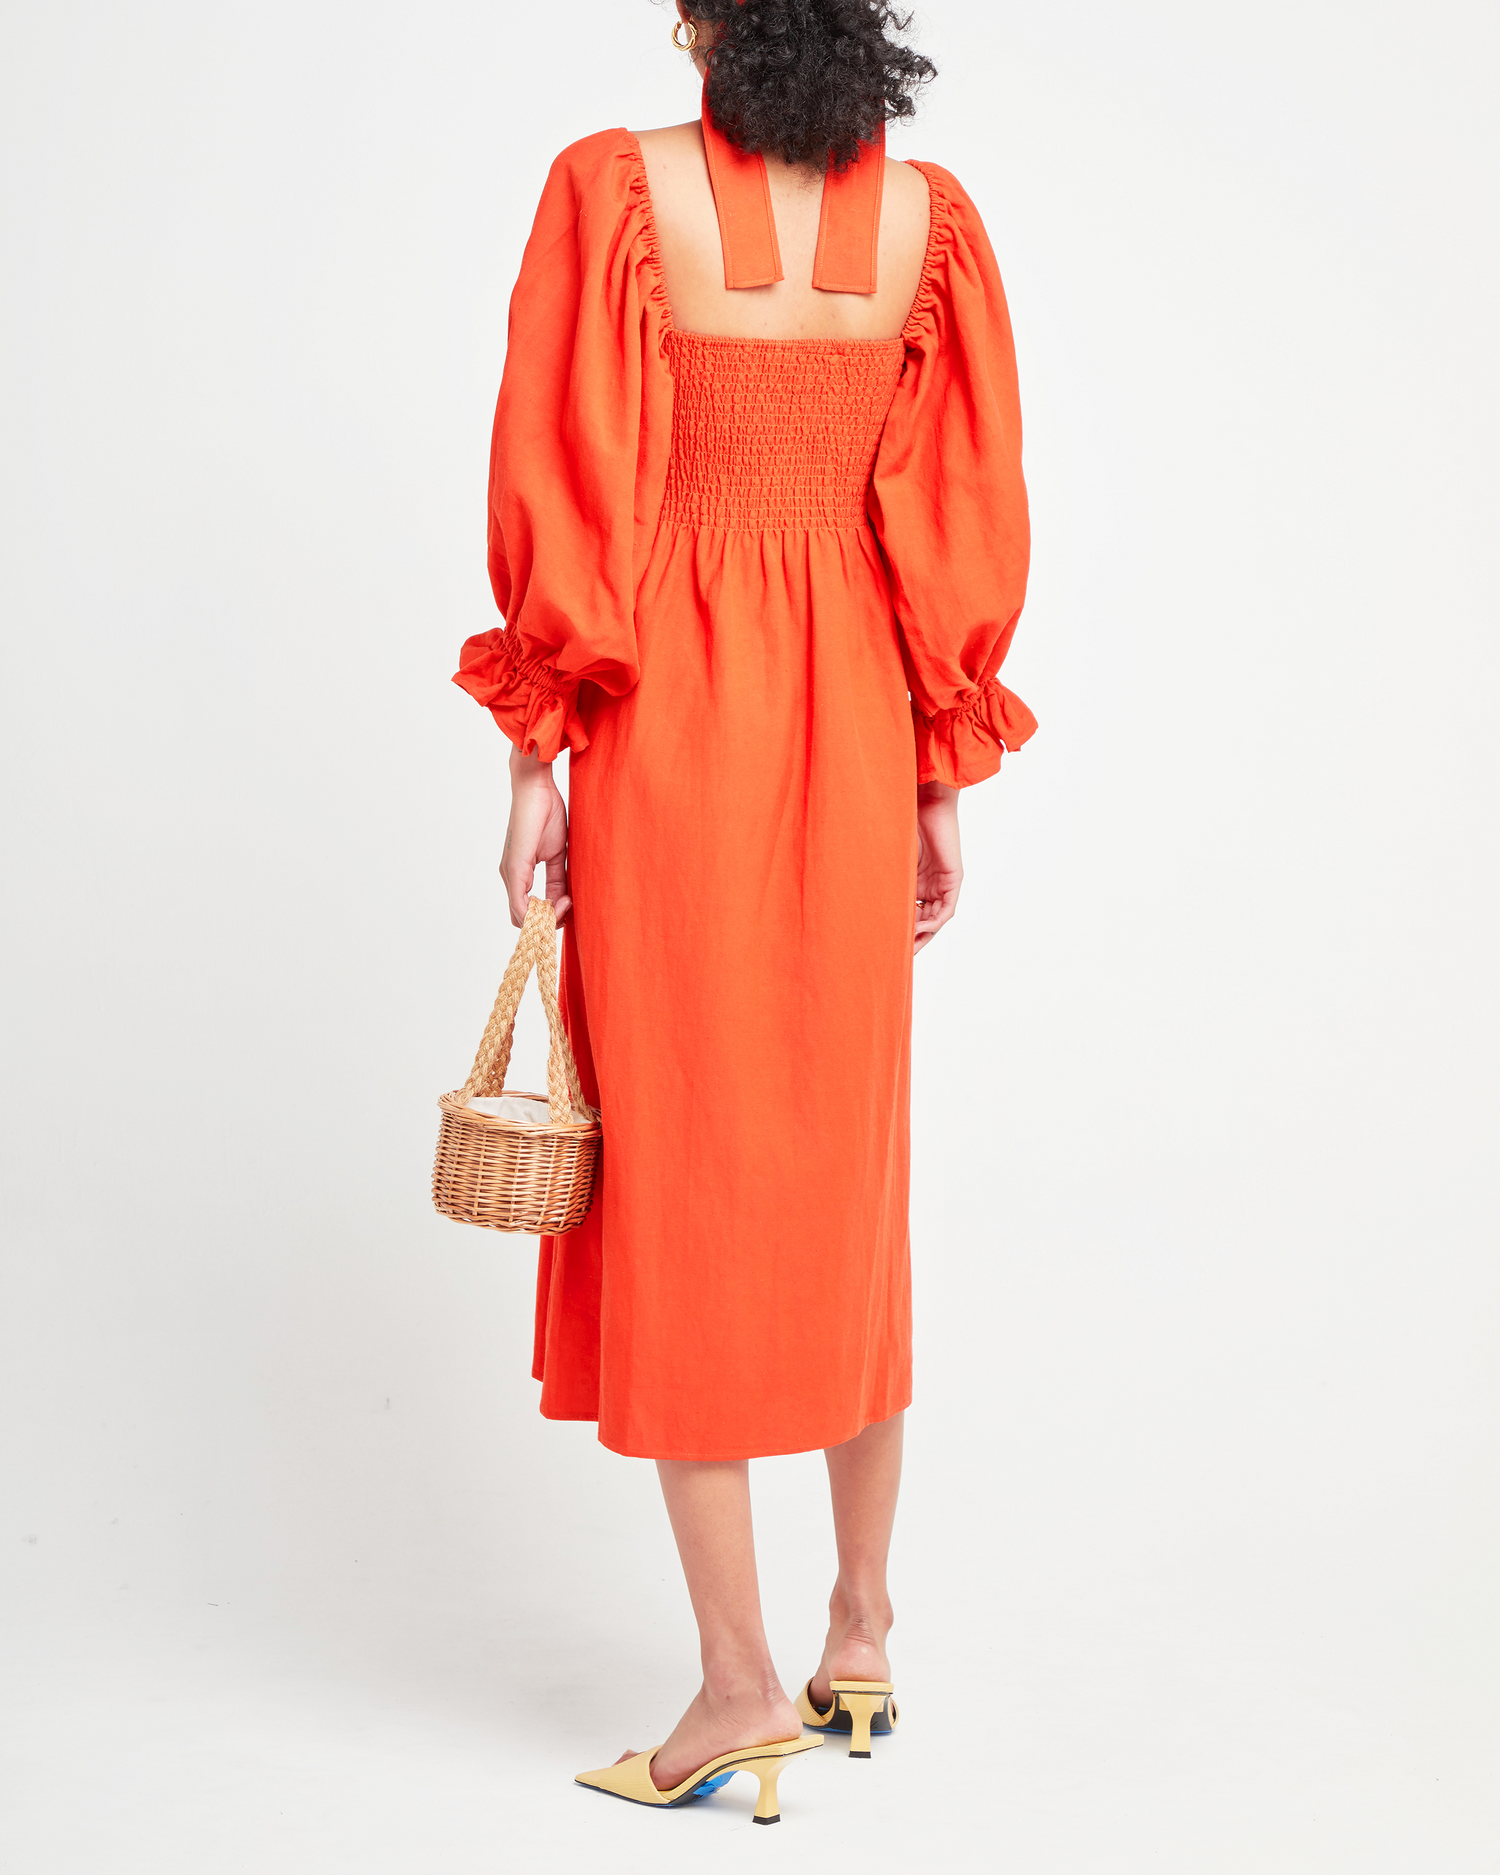 Second image of Athena Dress, a orange midi dress, long puff sleeves, smocked, square neckline